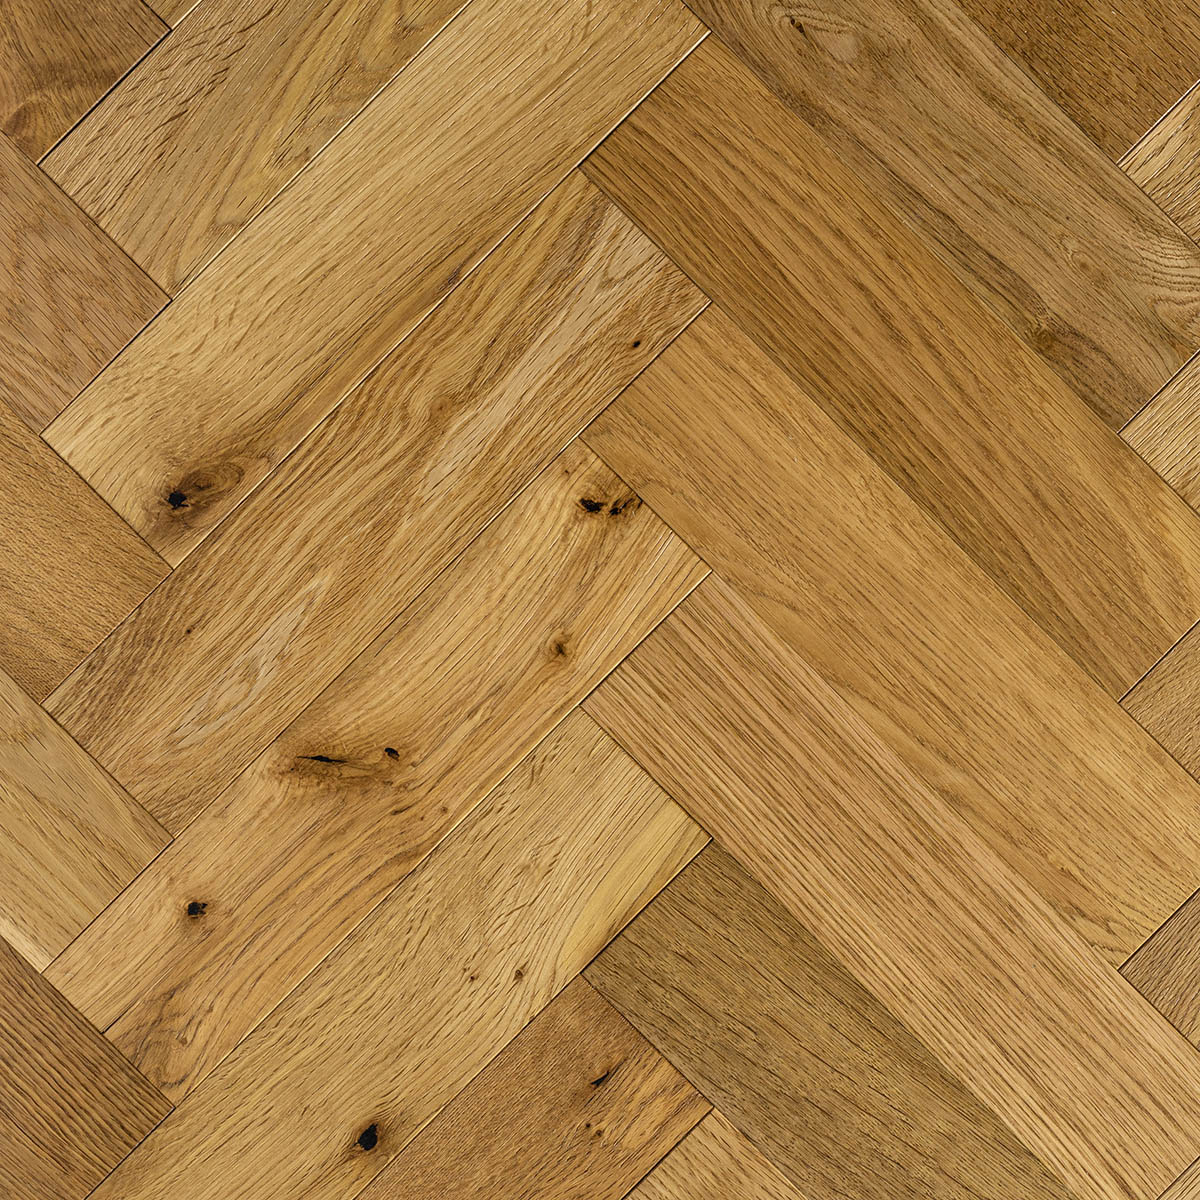 Adderley Place - Rustic-Grade Oak Herringbone Floor 280mm x 70mm